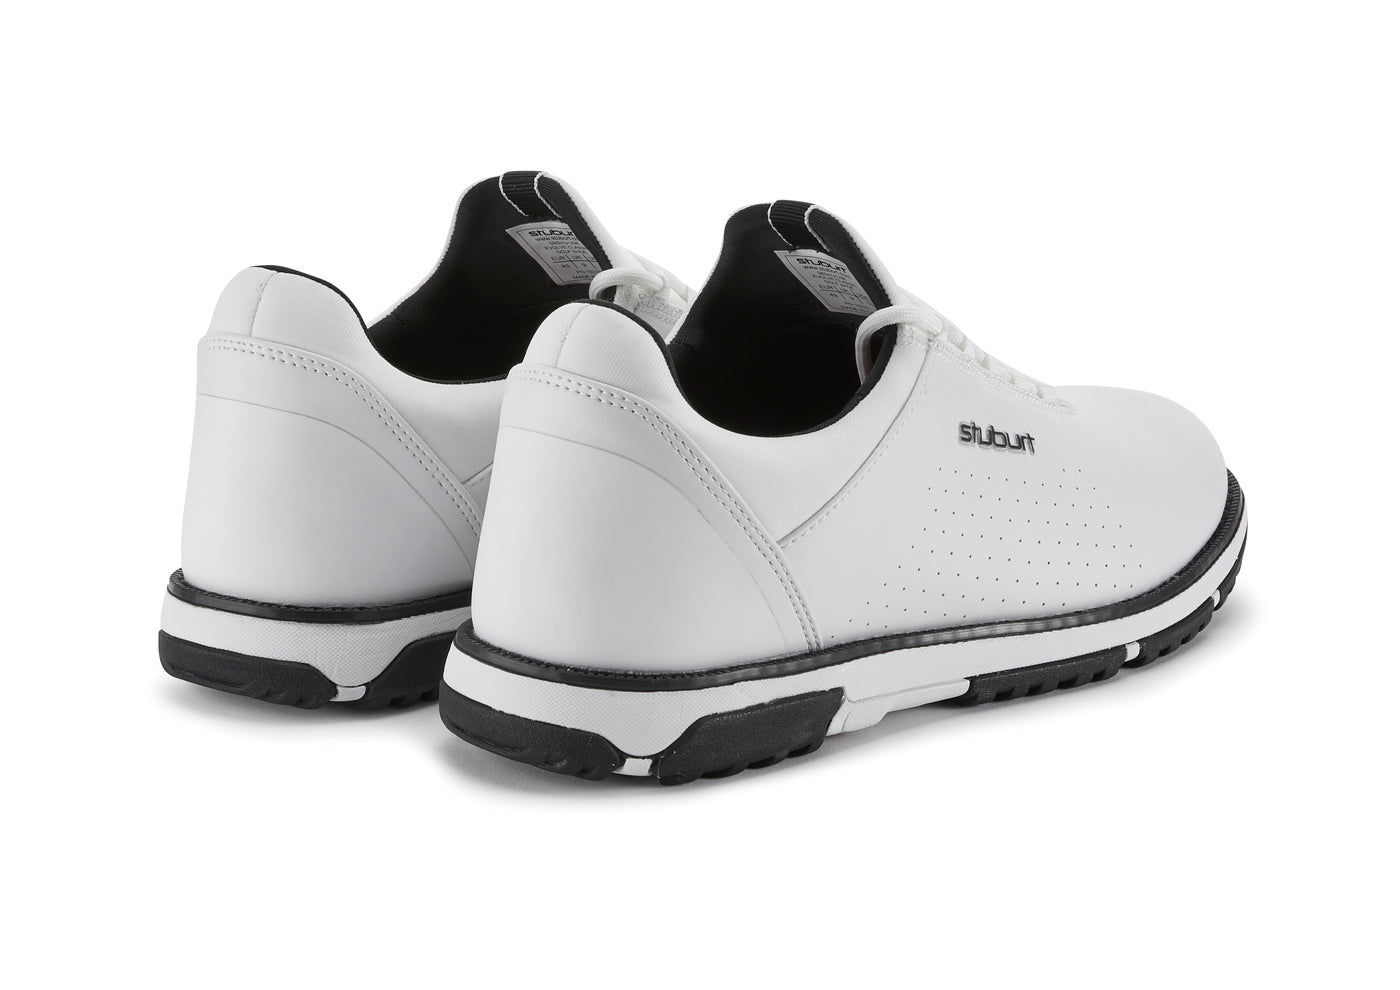 EVOLVE CLASSIC Hybrid Golf Shoe